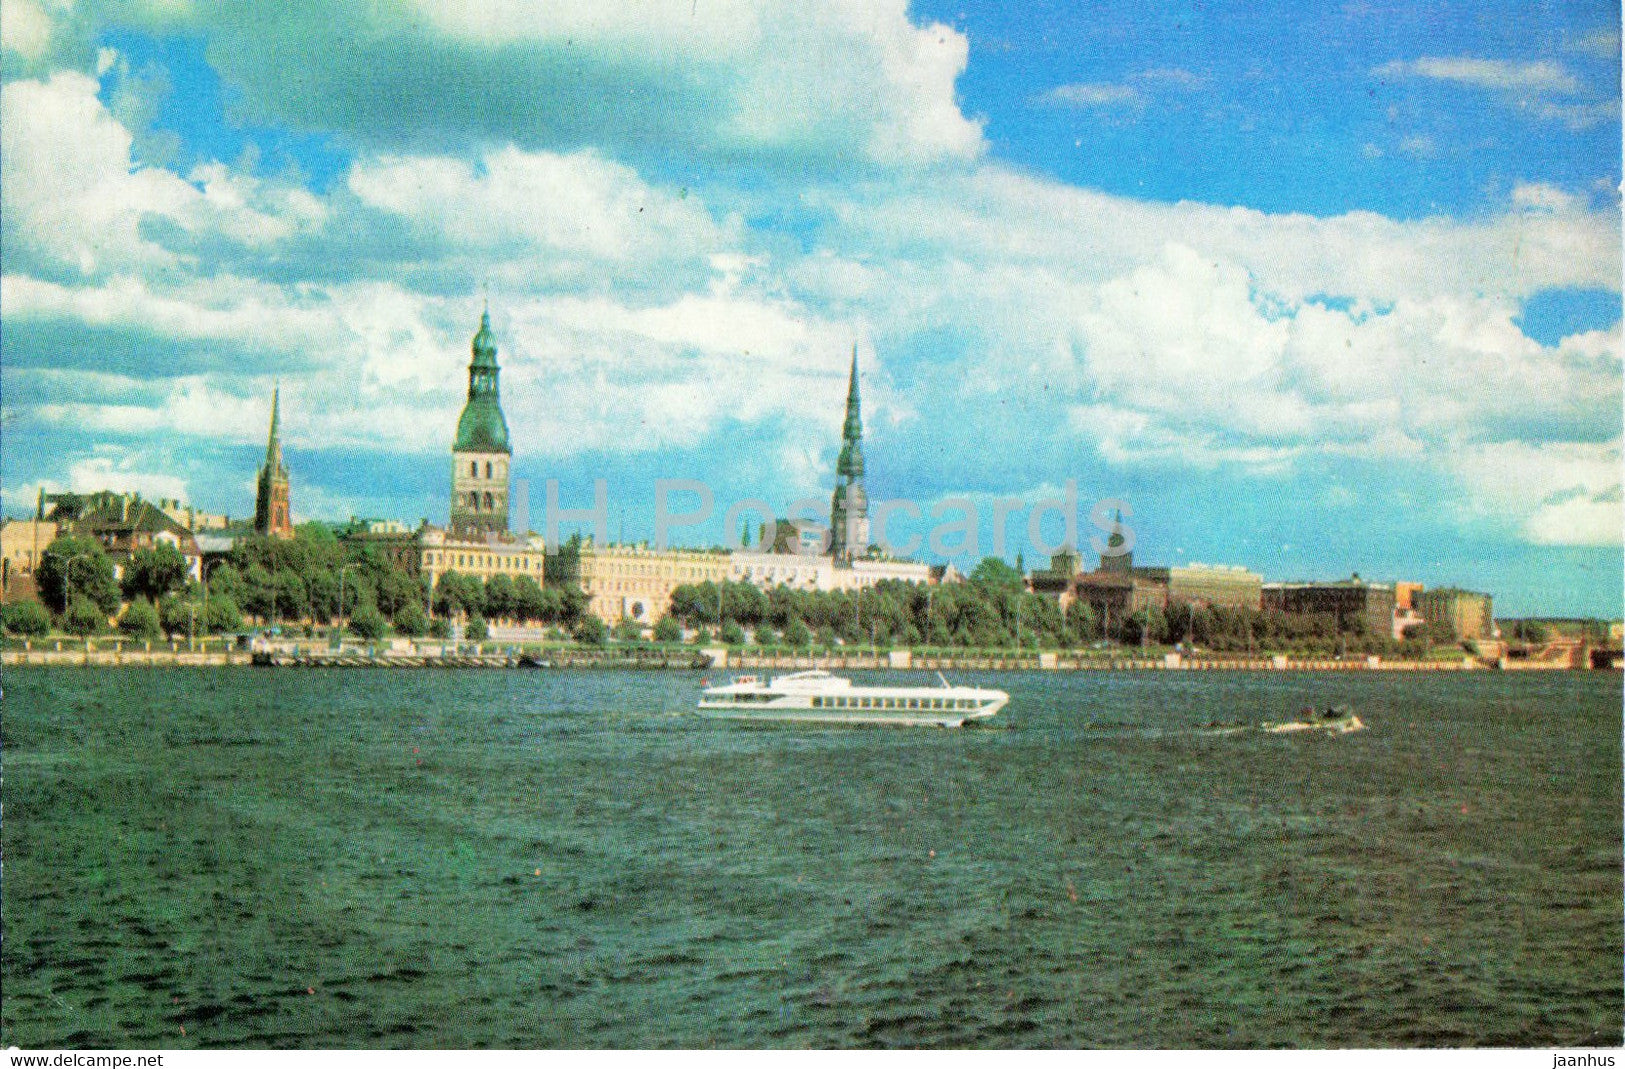 Riga - Old Town - View on the Komsomol Embankment - 1976 - Latvia USSR - unused - JH Postcards